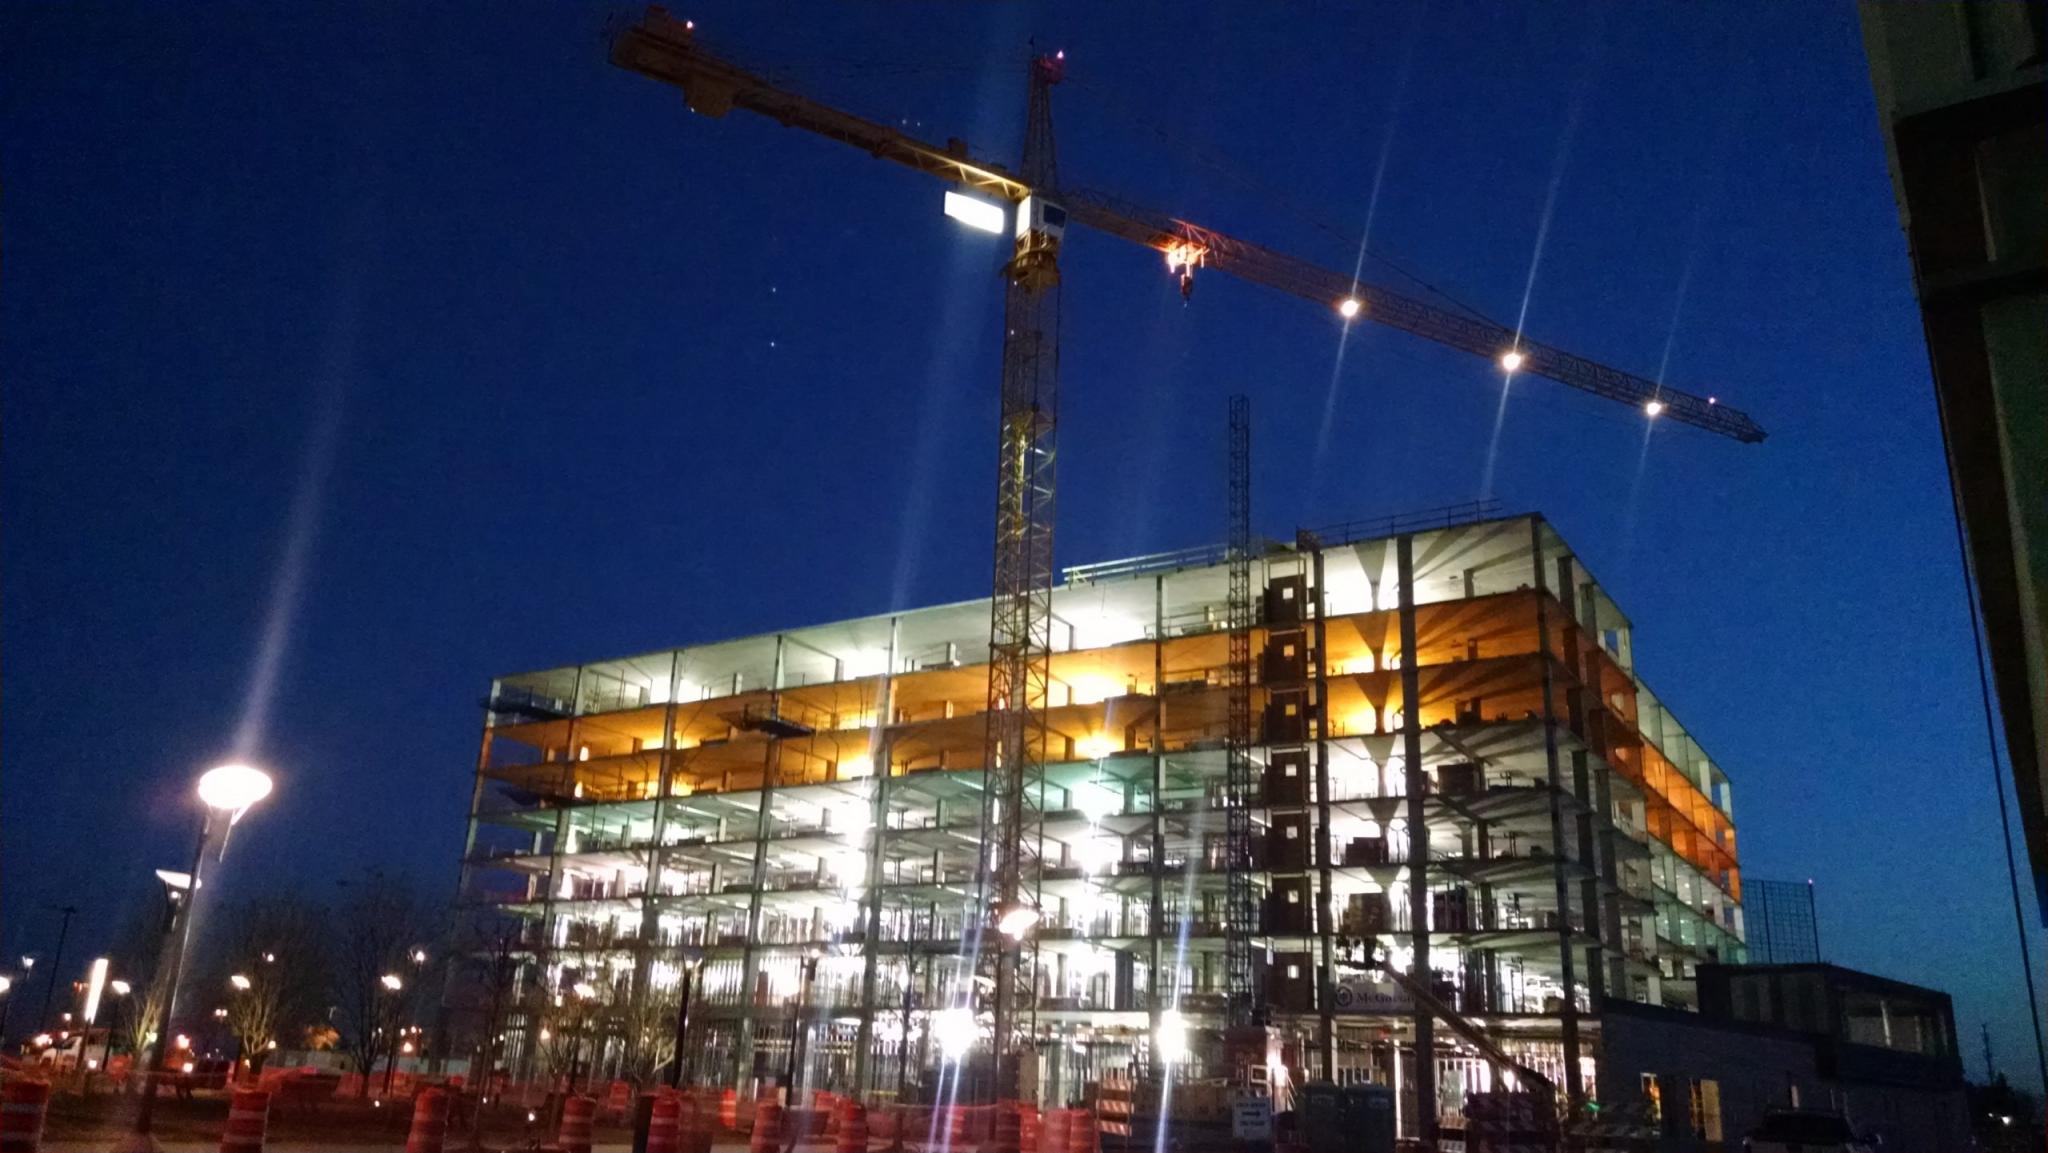 Construction at night